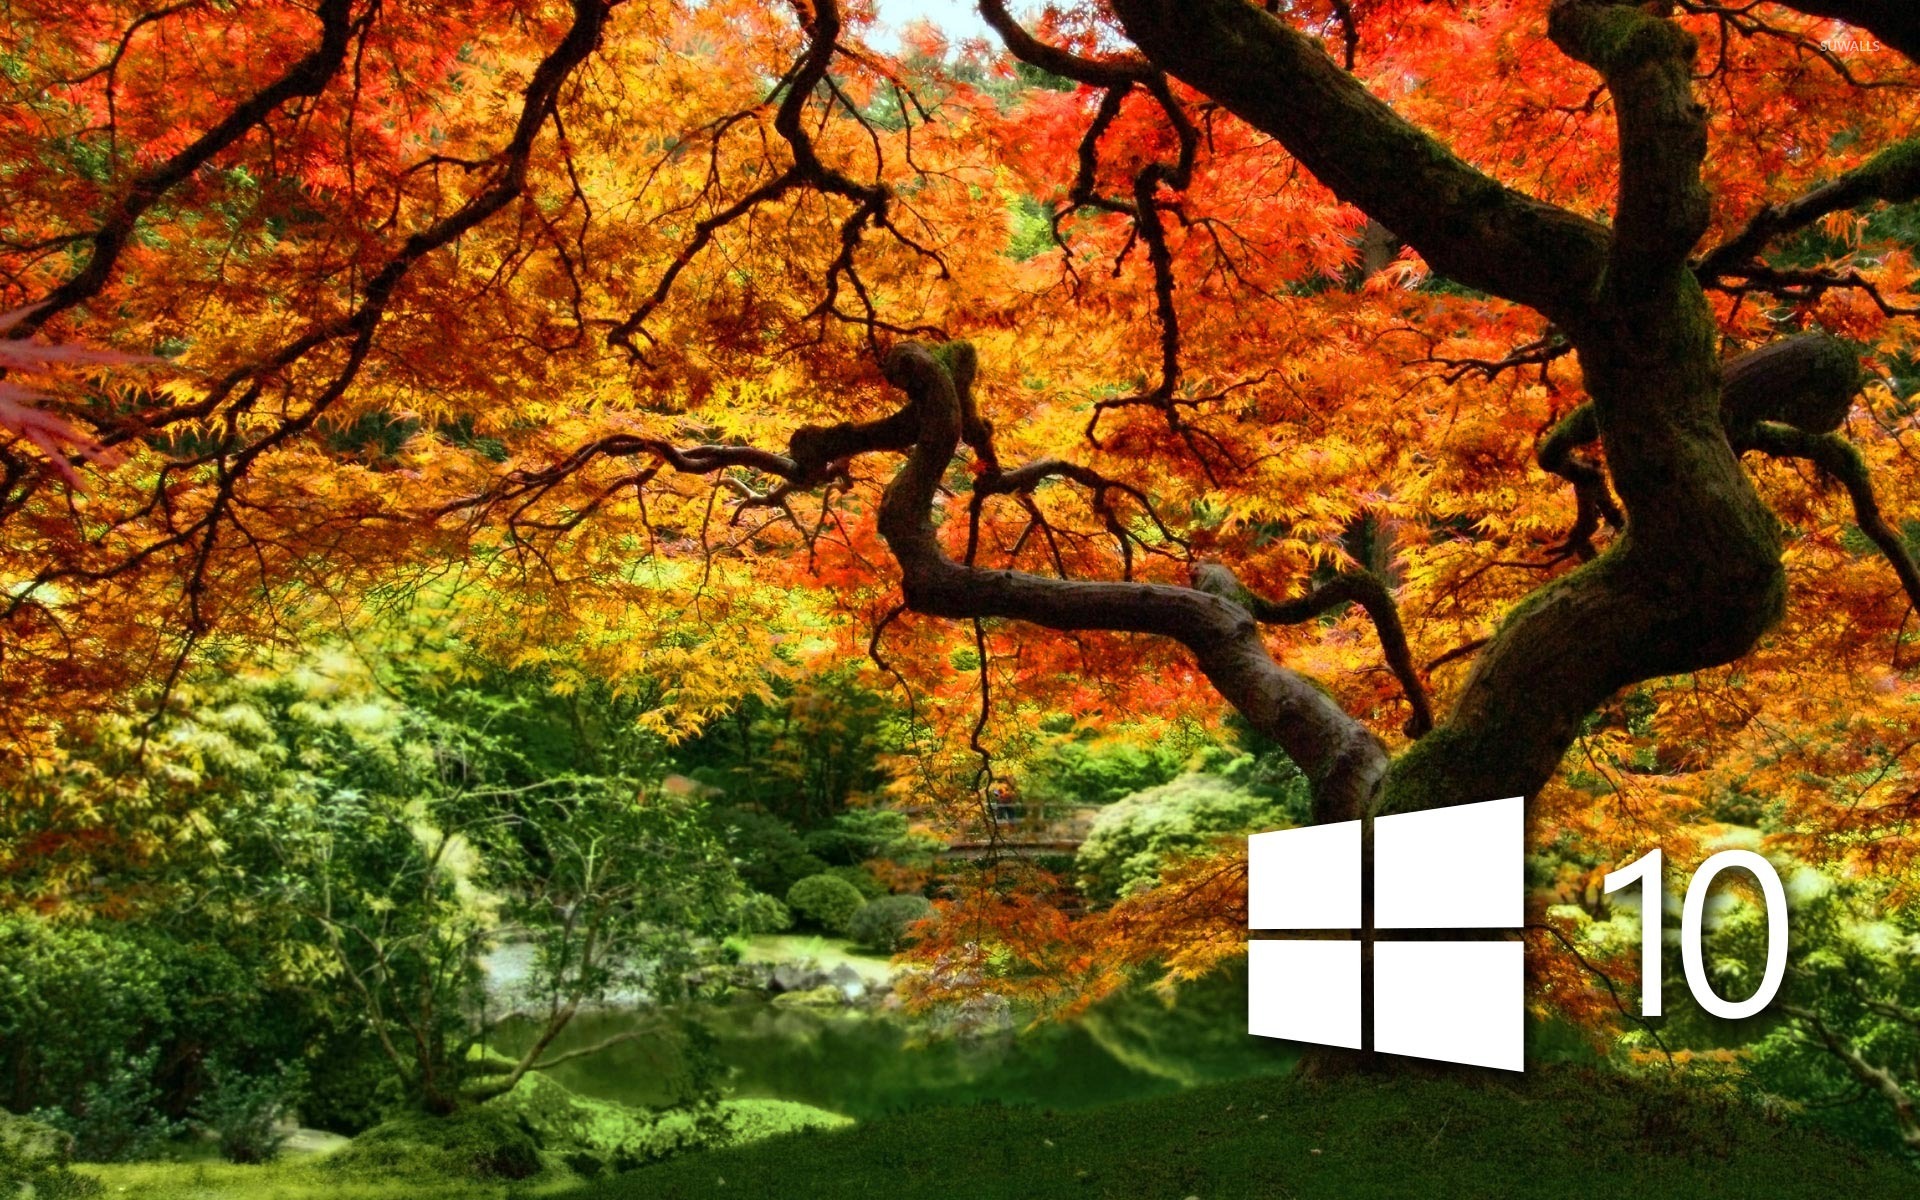  Windows  10  on the orange tree  simple logo wallpaper 